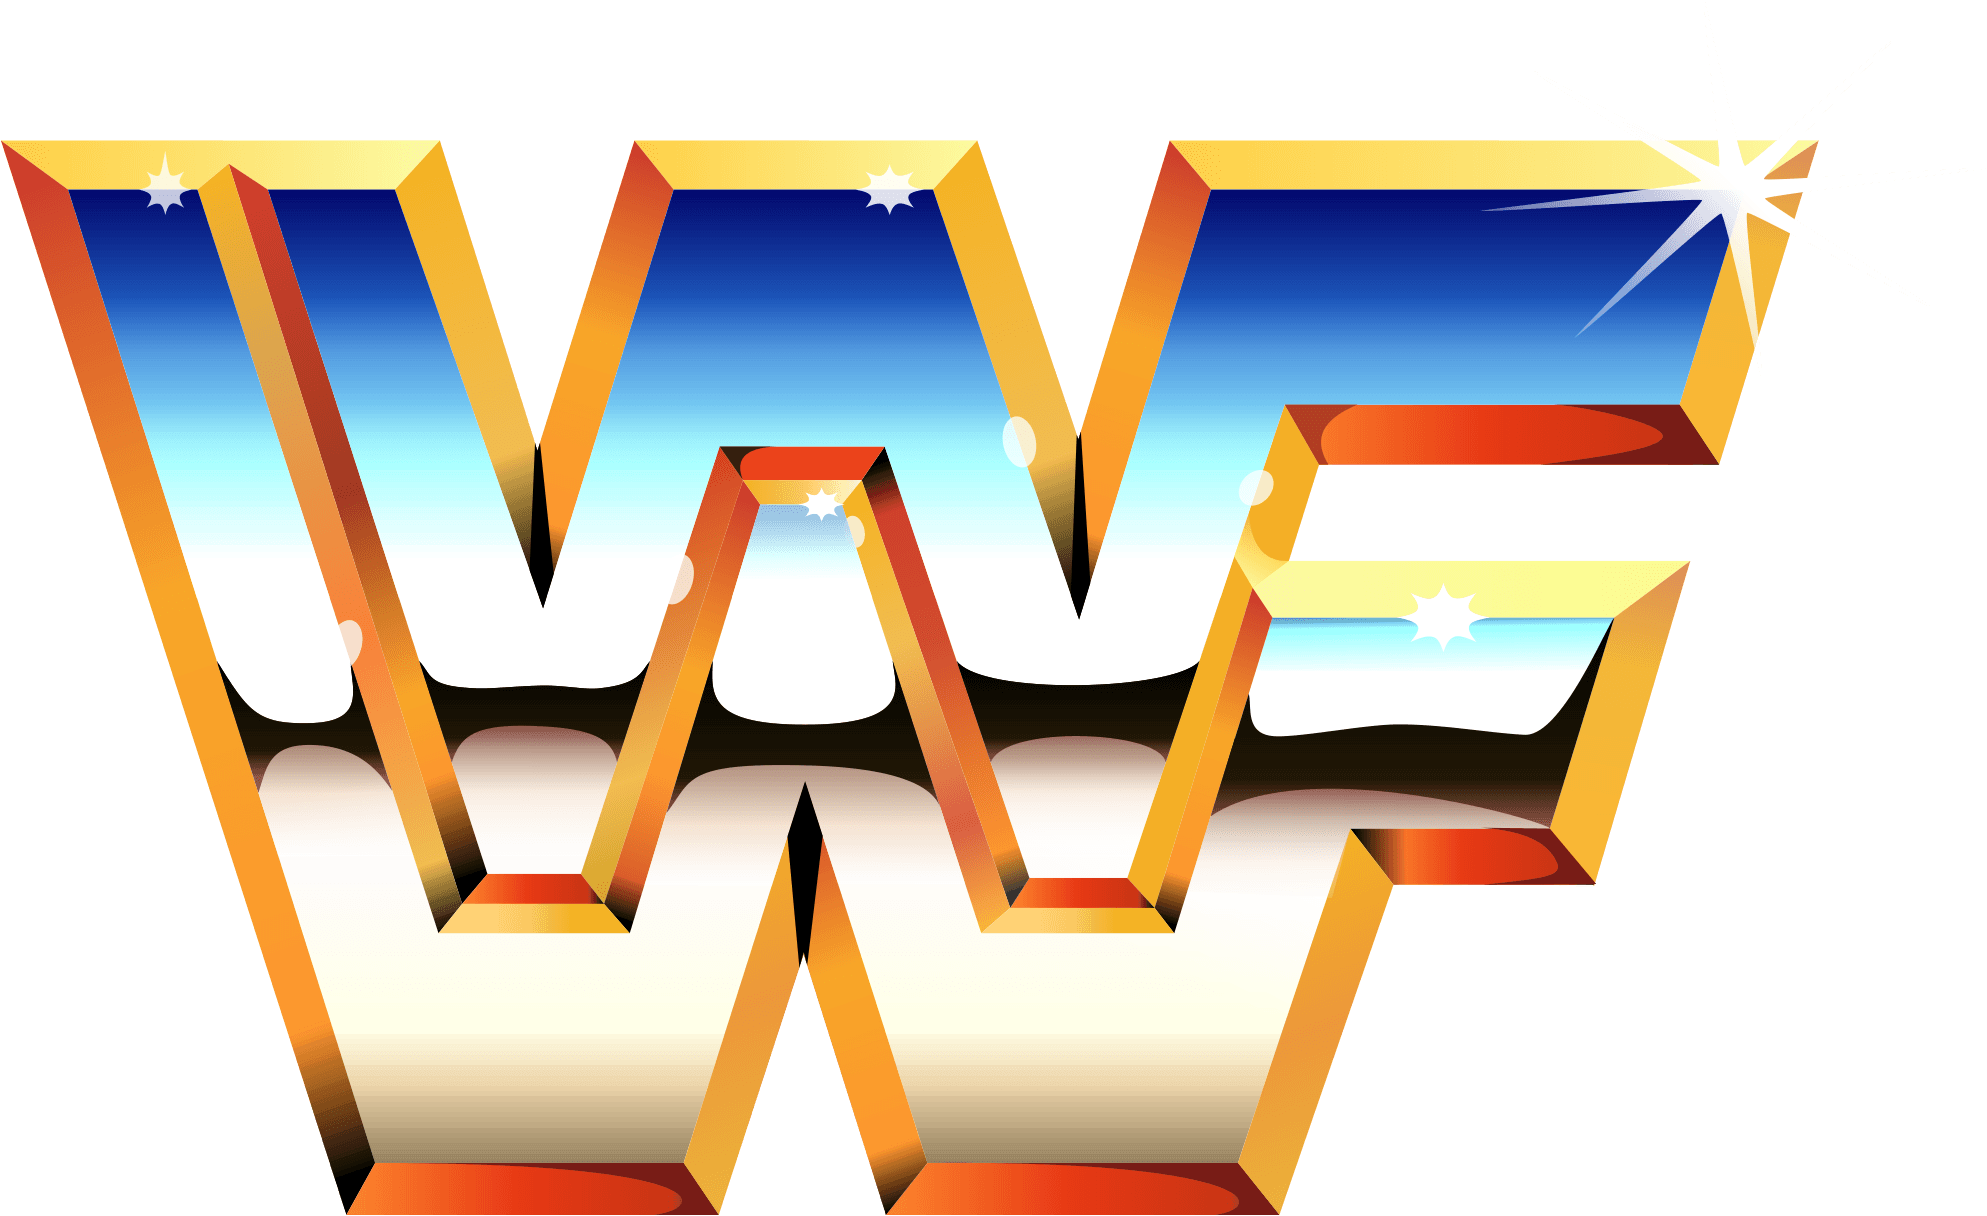 Bing Ultimate Logo - WWE Wrestling Logo - Bing Images | in the ring | Wwf logo, Wrestling ...